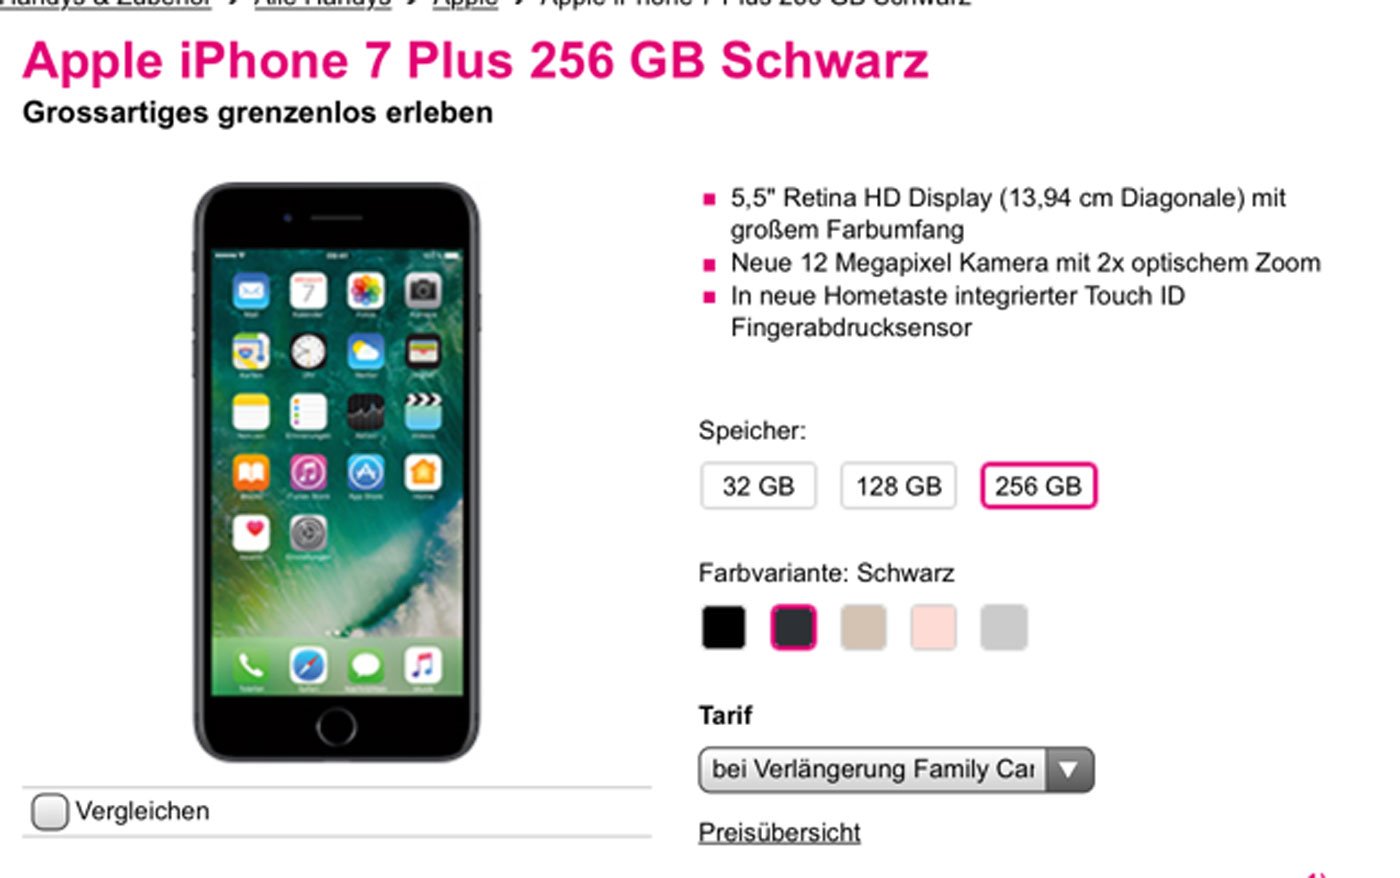 iPhone 7 Vertragsverlängerung (VVL) bei Telekom bereits möglich! 4